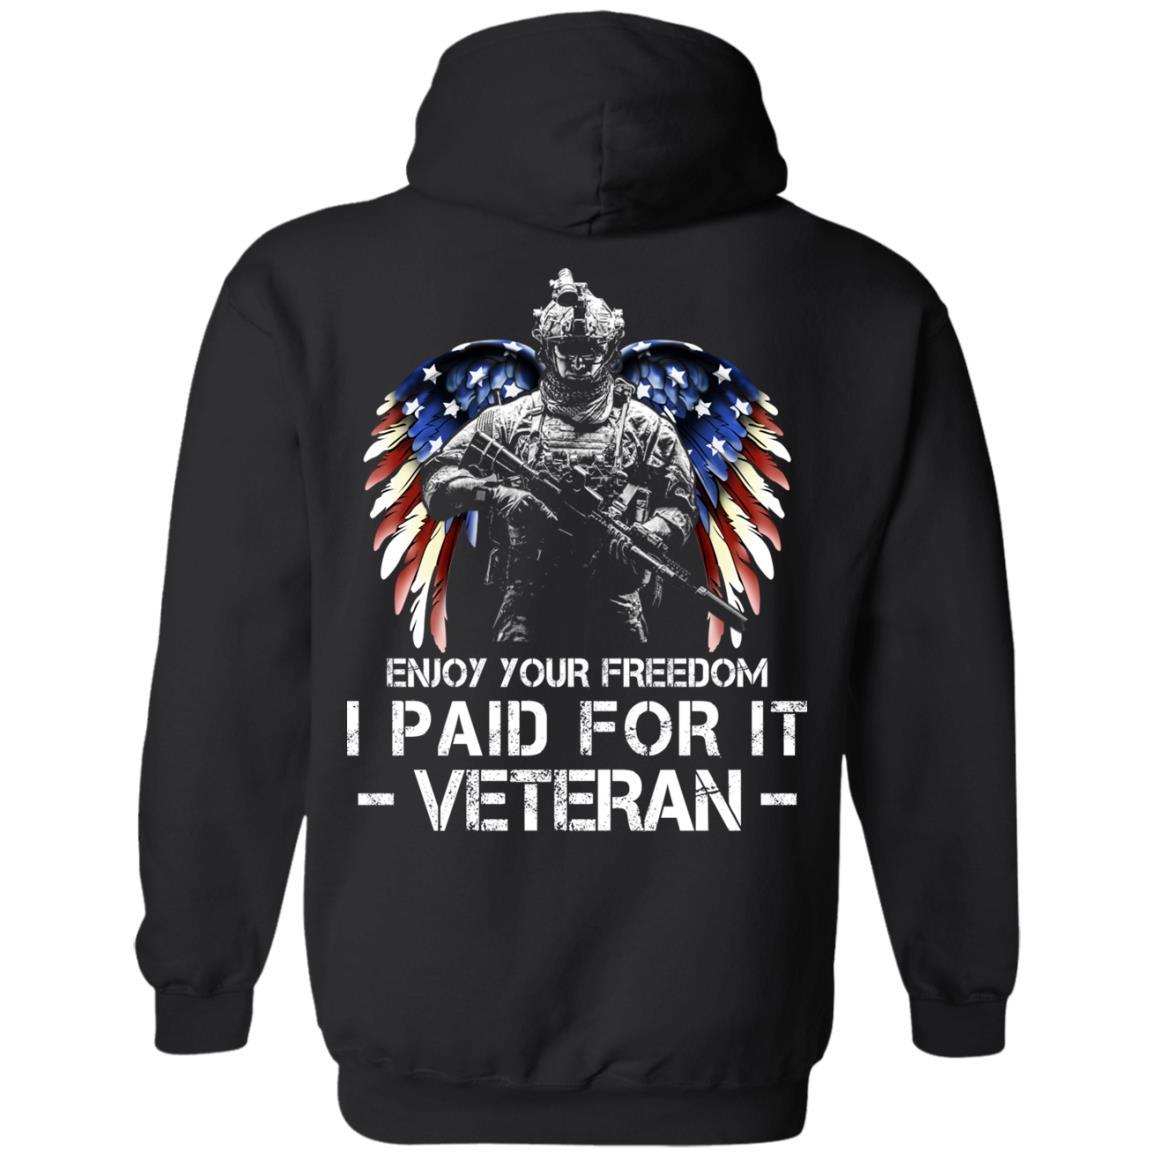 Military T-Shirt "Enjoy Your Freedom - I Paid For It Veteran Men" On Back-TShirt-General-Veterans Nation